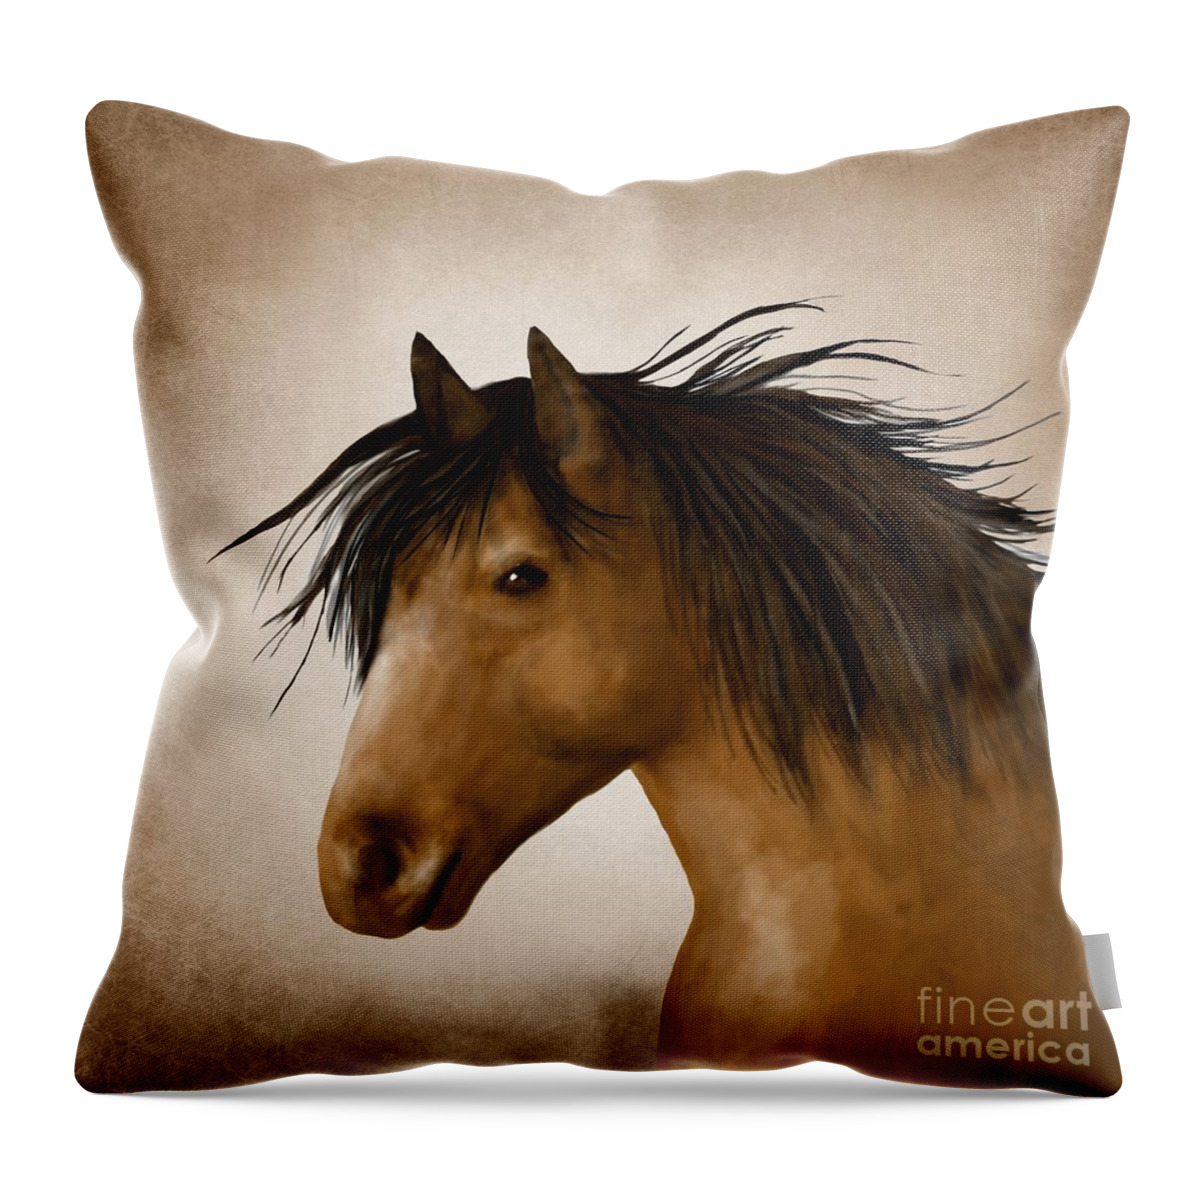 Horse Throw Pillow featuring the digital art Horse 11 by Lucie Dumas